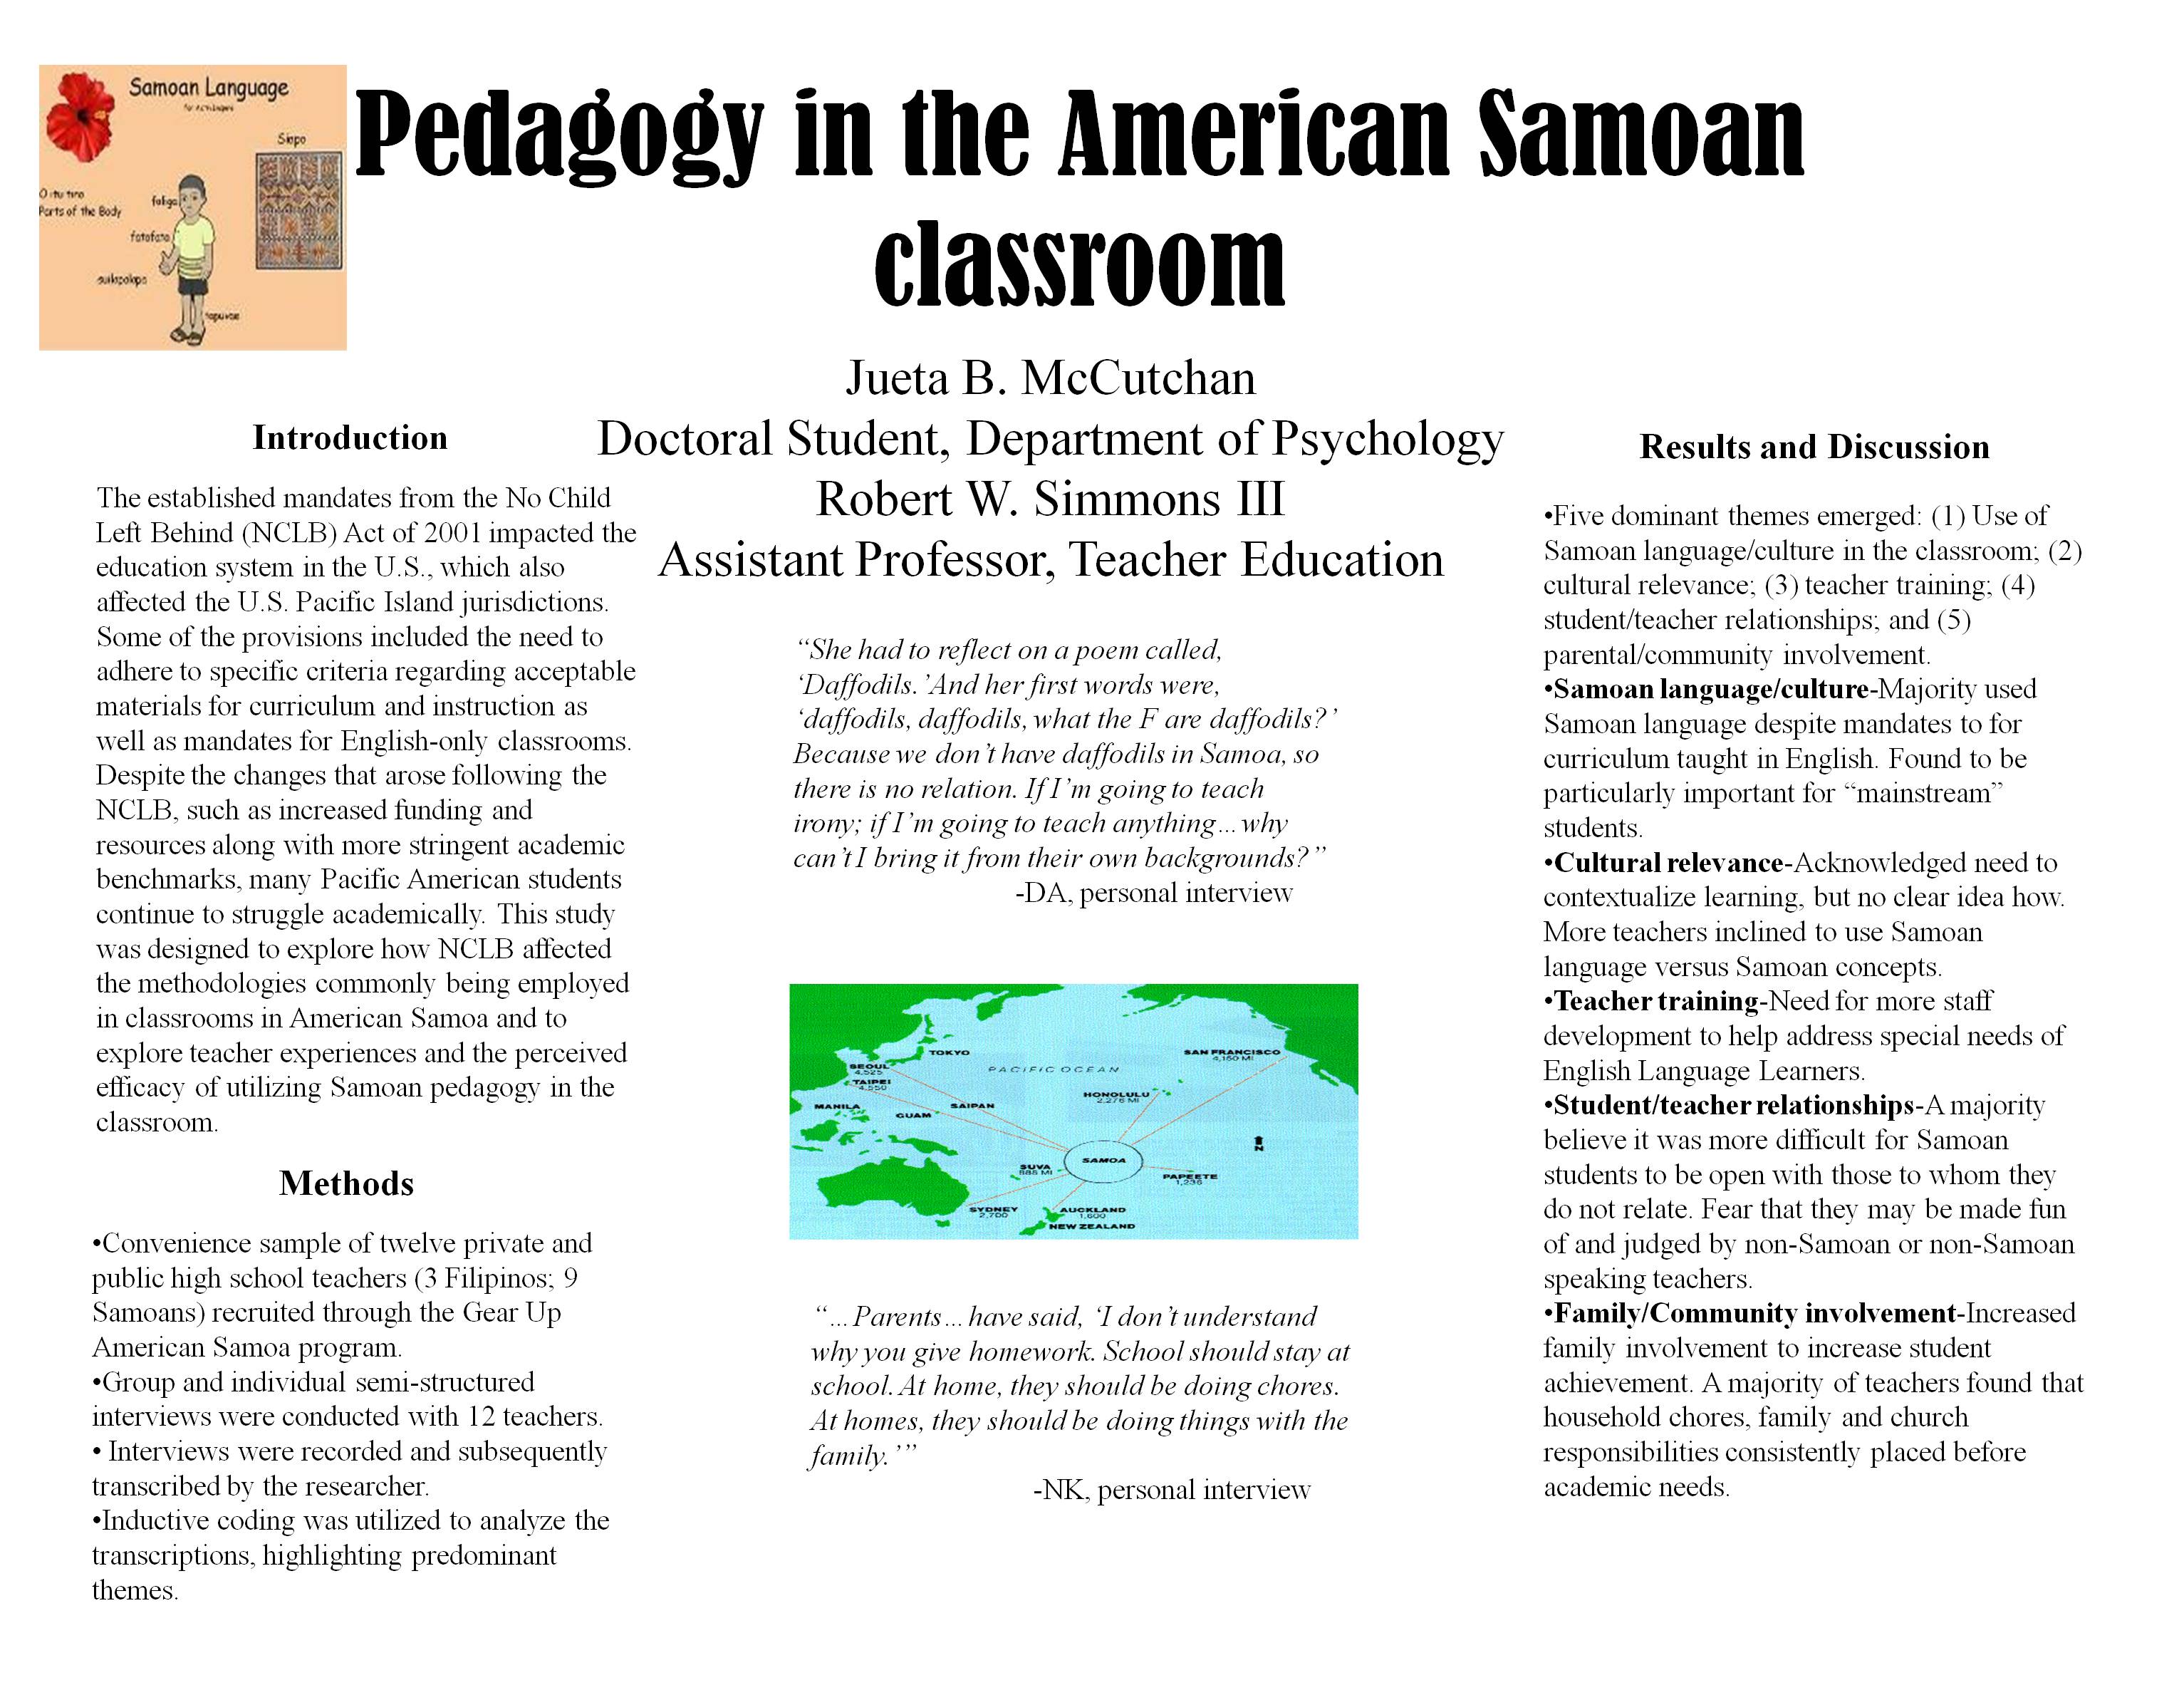 Poster image: The Use of Samoan Pedagogy in the American Samoa Classroom